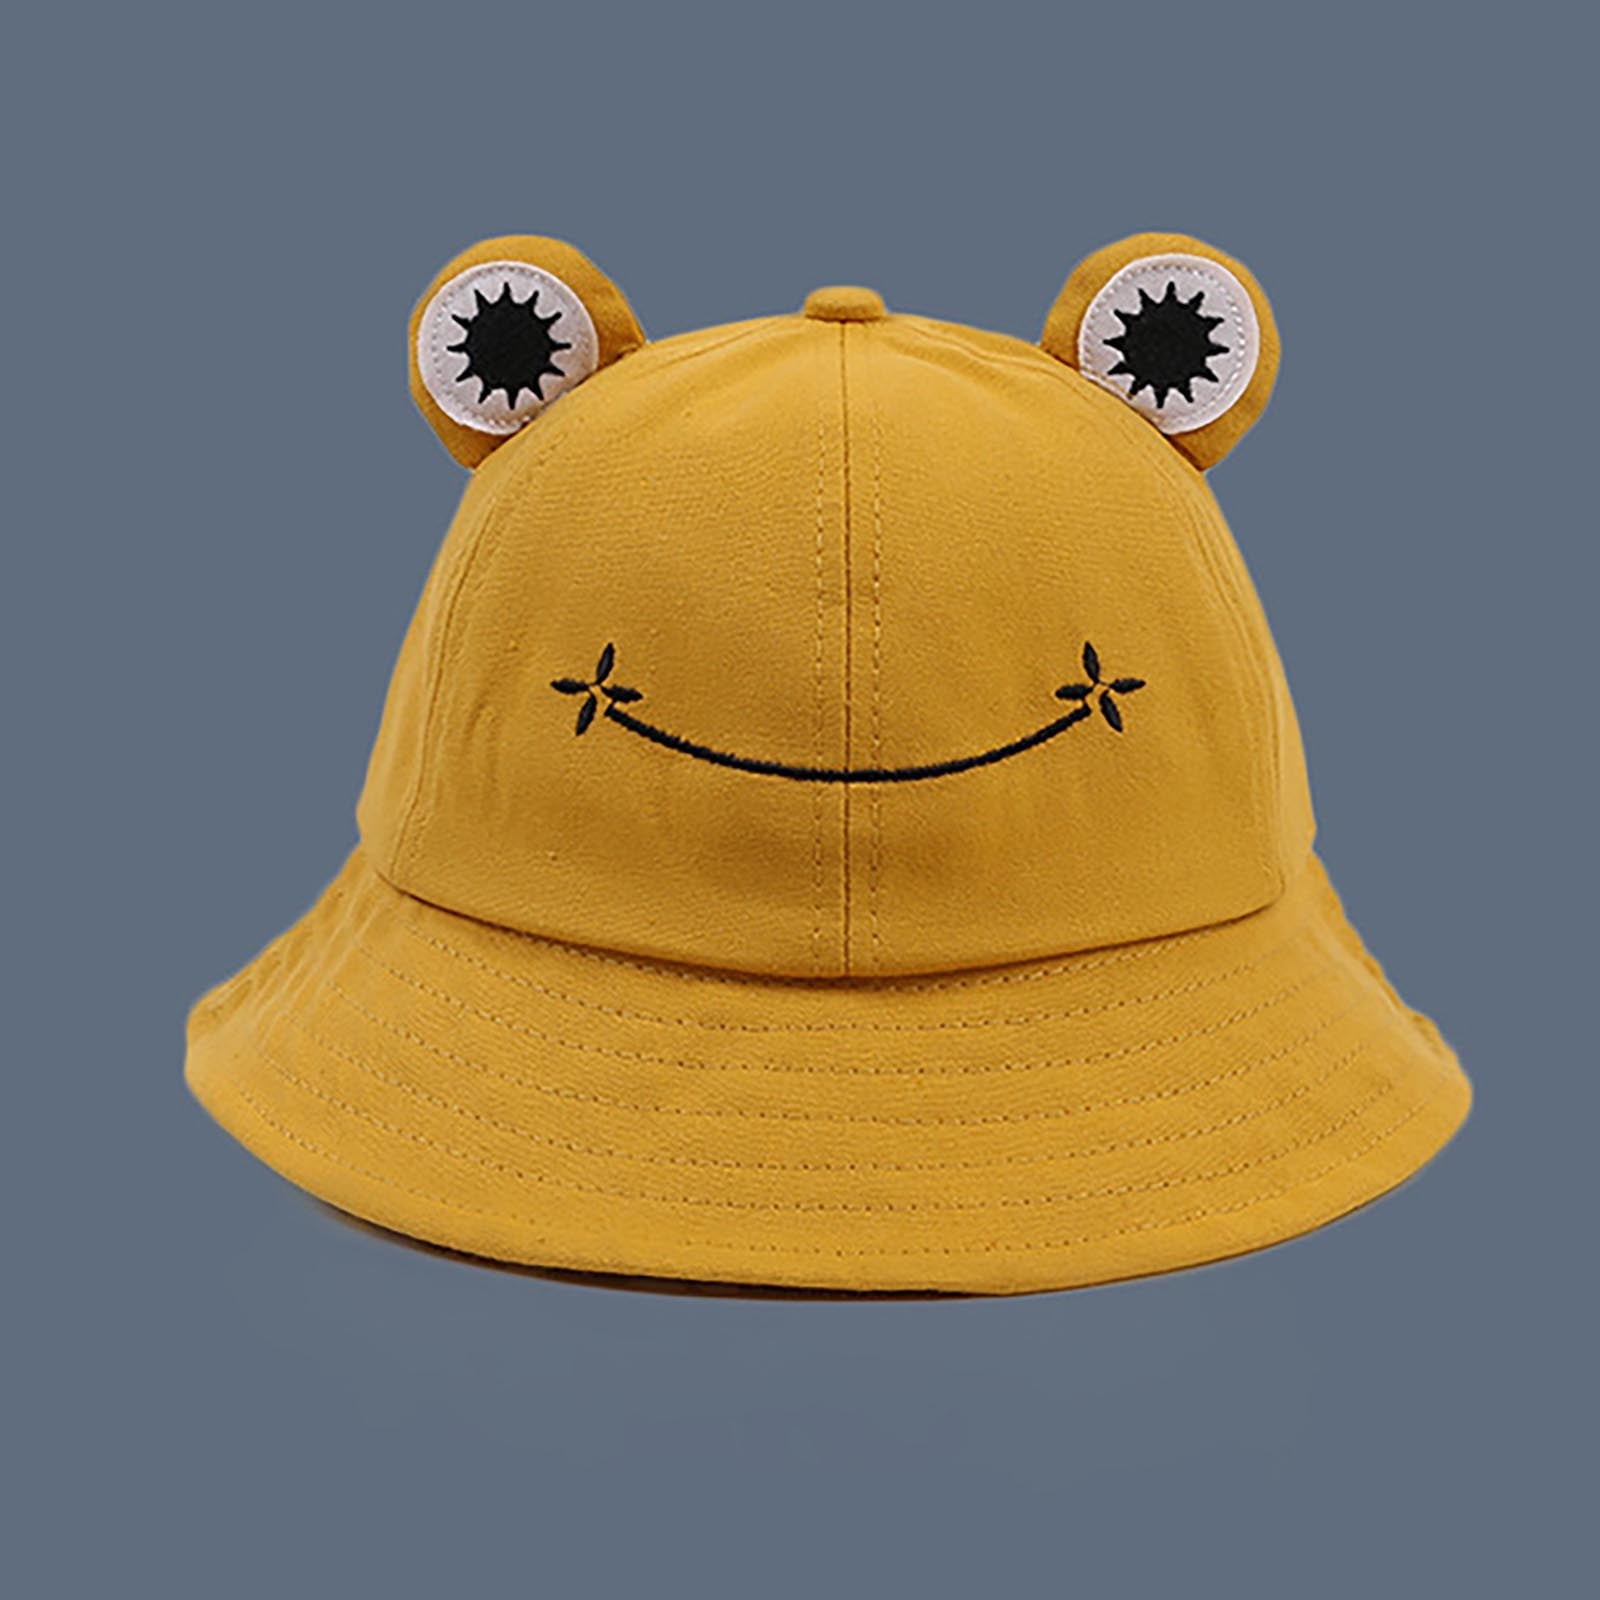 Adult Cotton Twill Fishing Camping Beach Bucket Hat Hats Cap Caps Super Nice! 